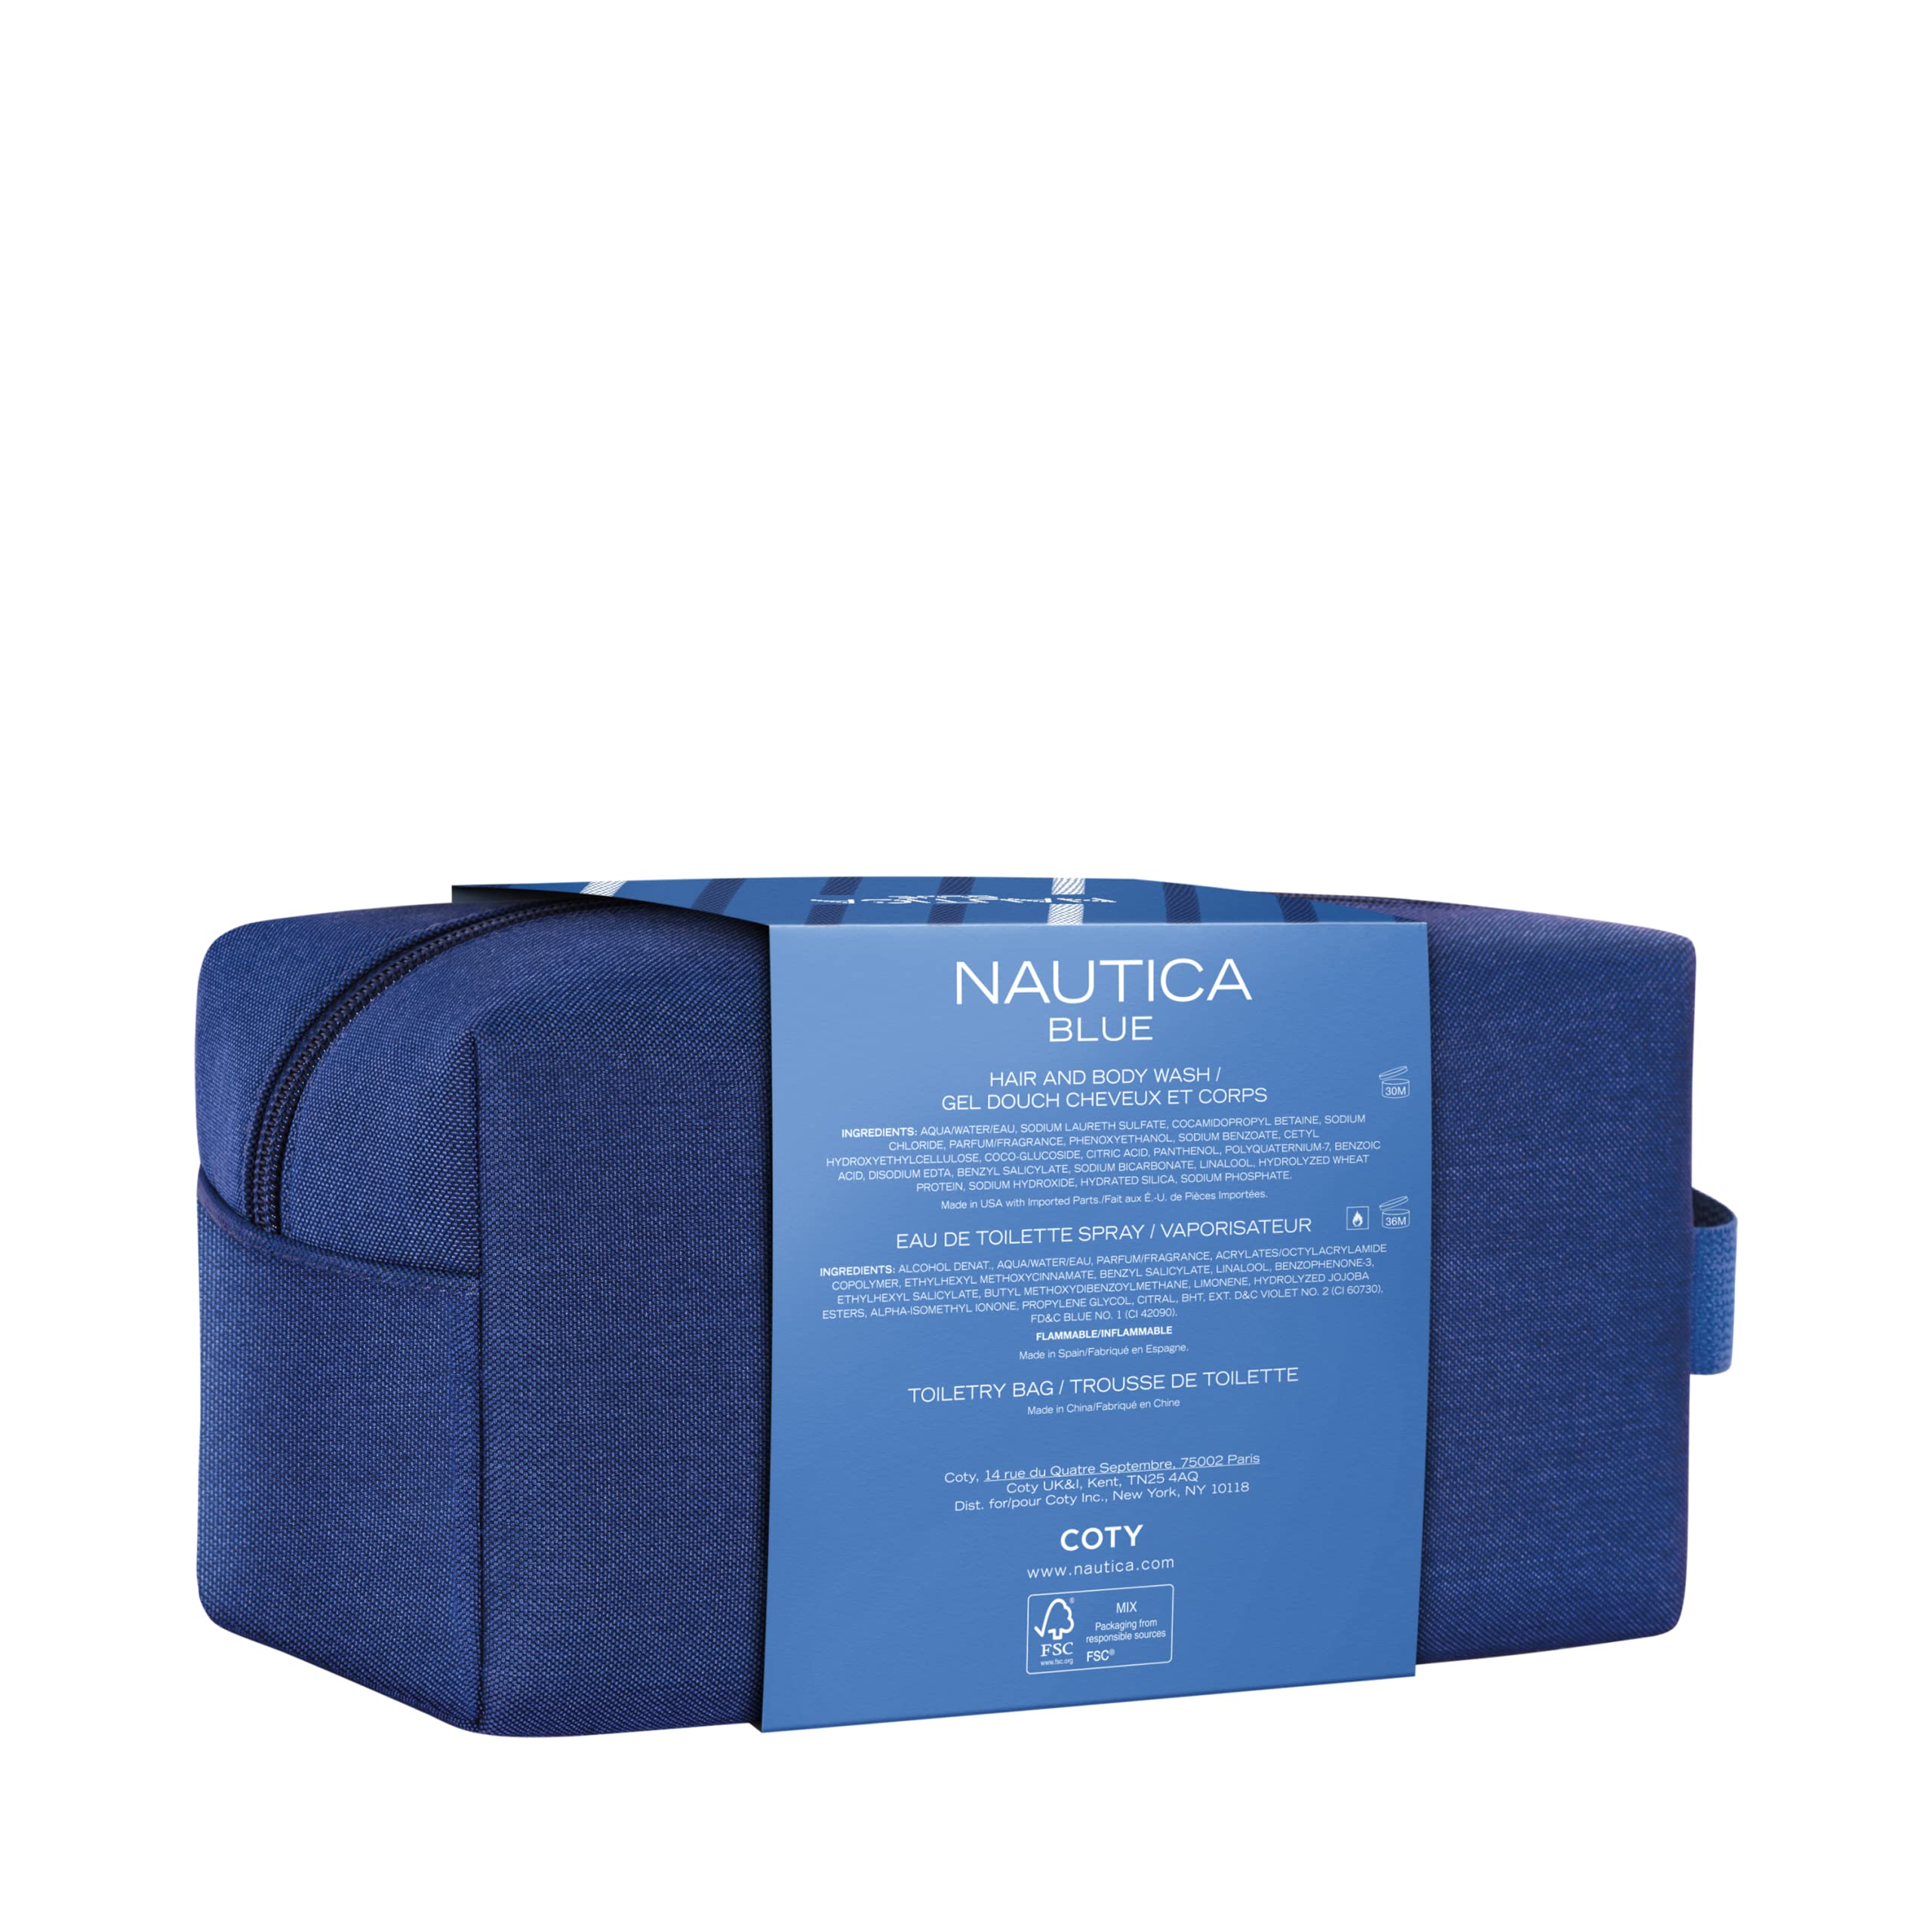 Nautica Blue 3 piece Gift Set for Men - 1.6 oz Eau De Toilette Spray + 2.5 oz Hair and Body Wash + Toiletry Bag